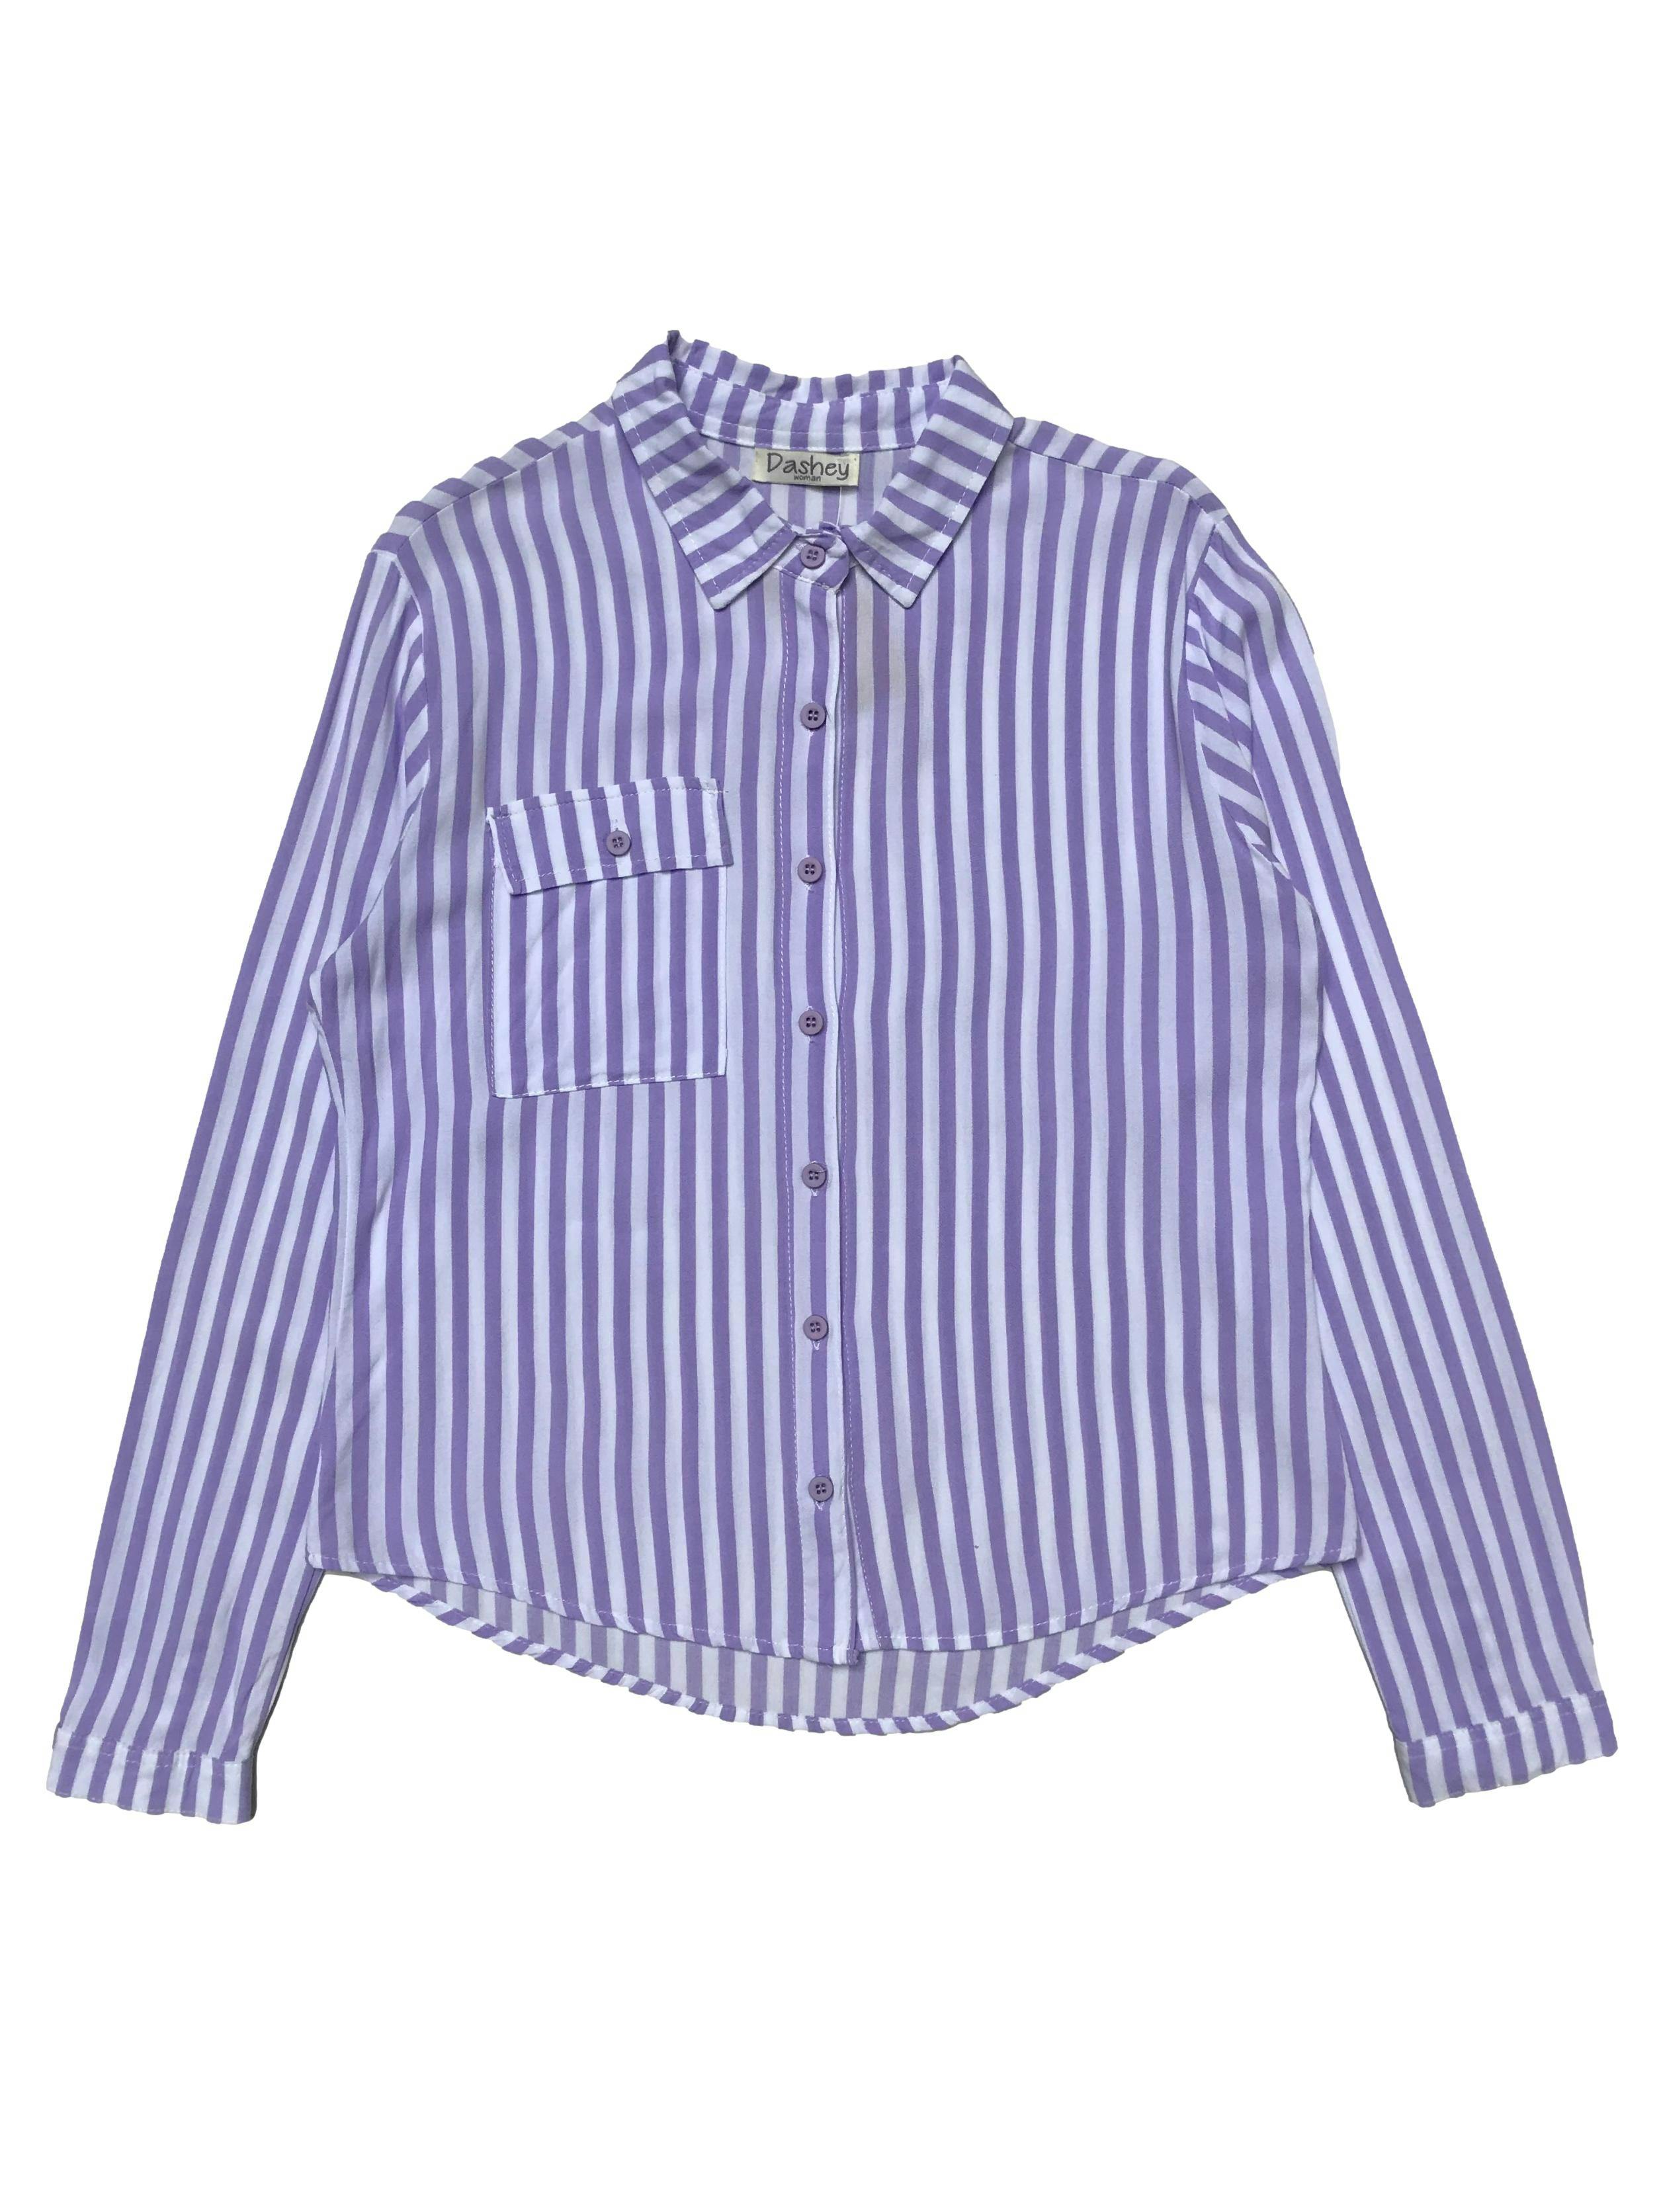 Blusa a rayas lila y blanco, modelo camisa, tela tipo chalis. Busto 90cm Largo 48cm